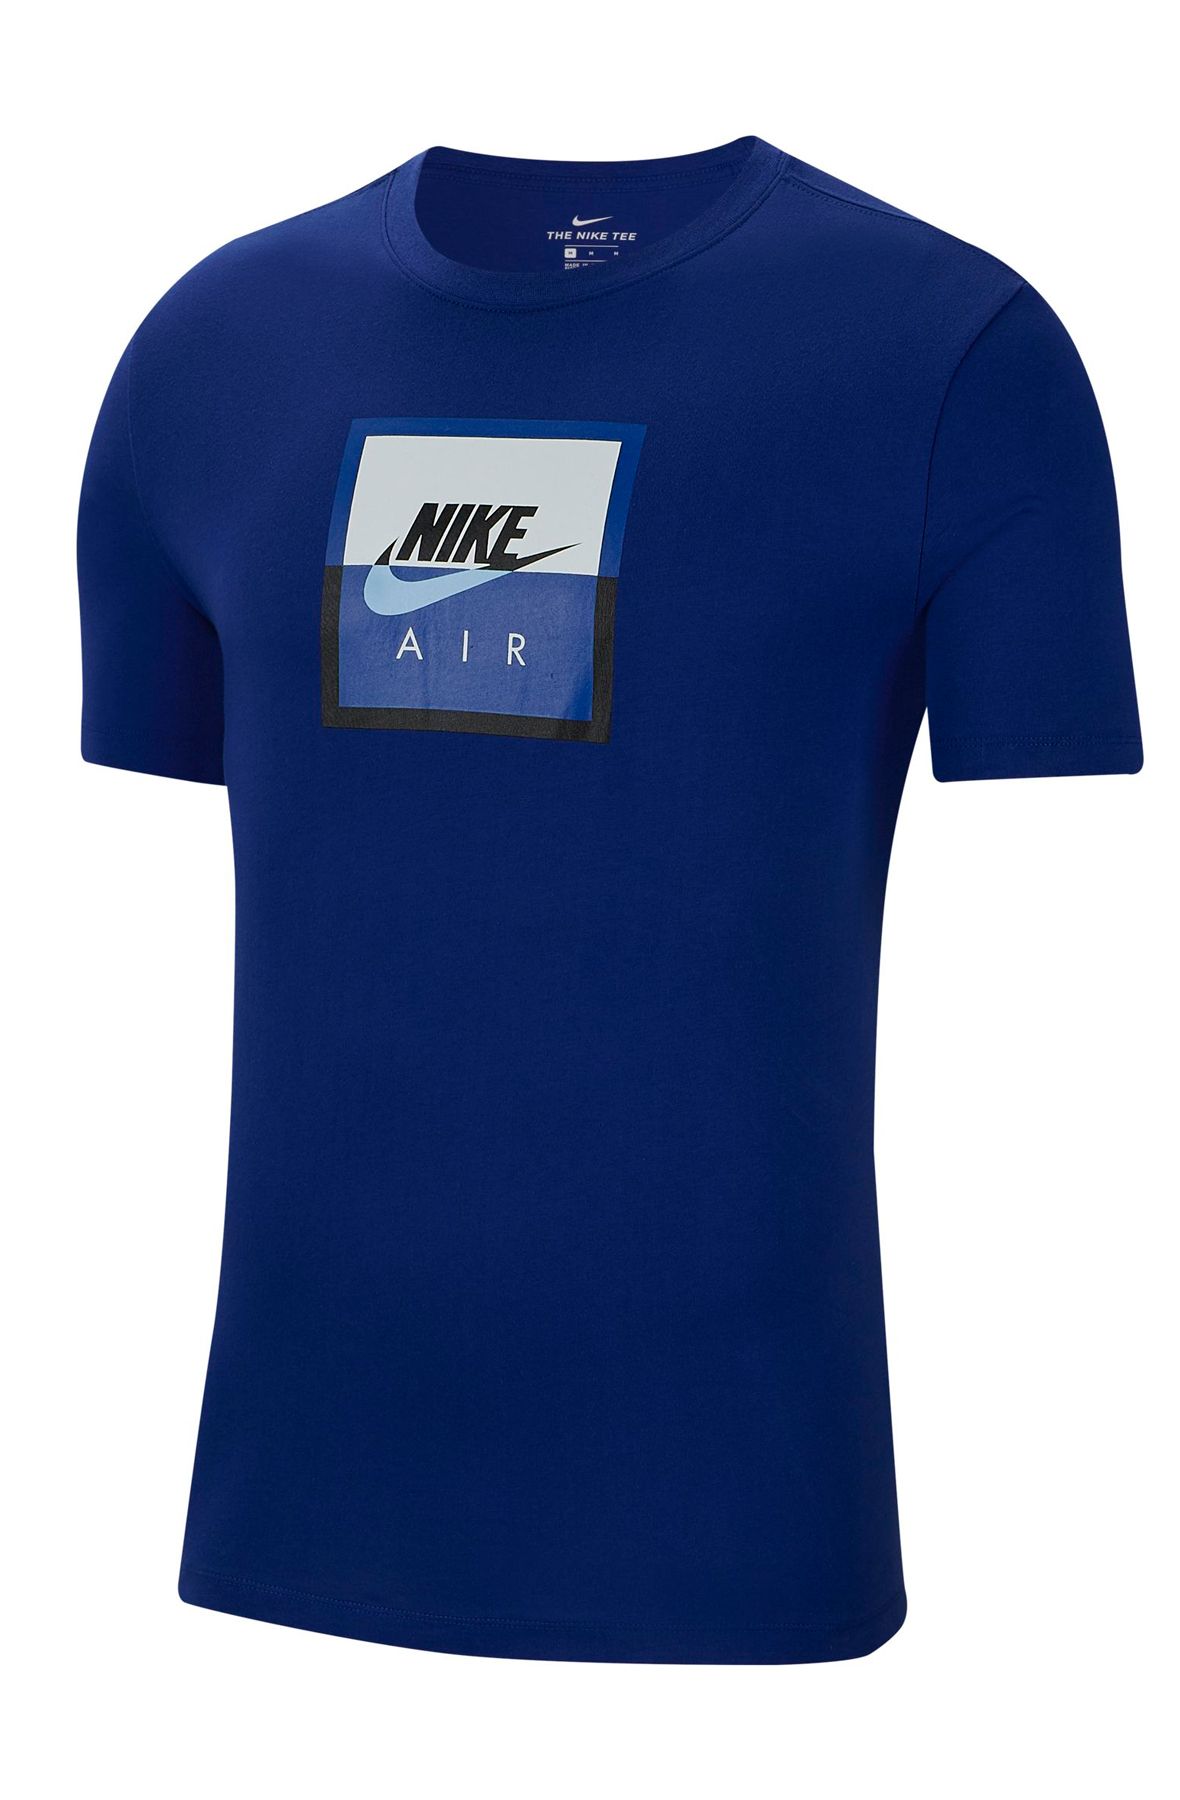 NIKE Sportswear Divided Box Logo Tee CT7126 455 - Shiekh